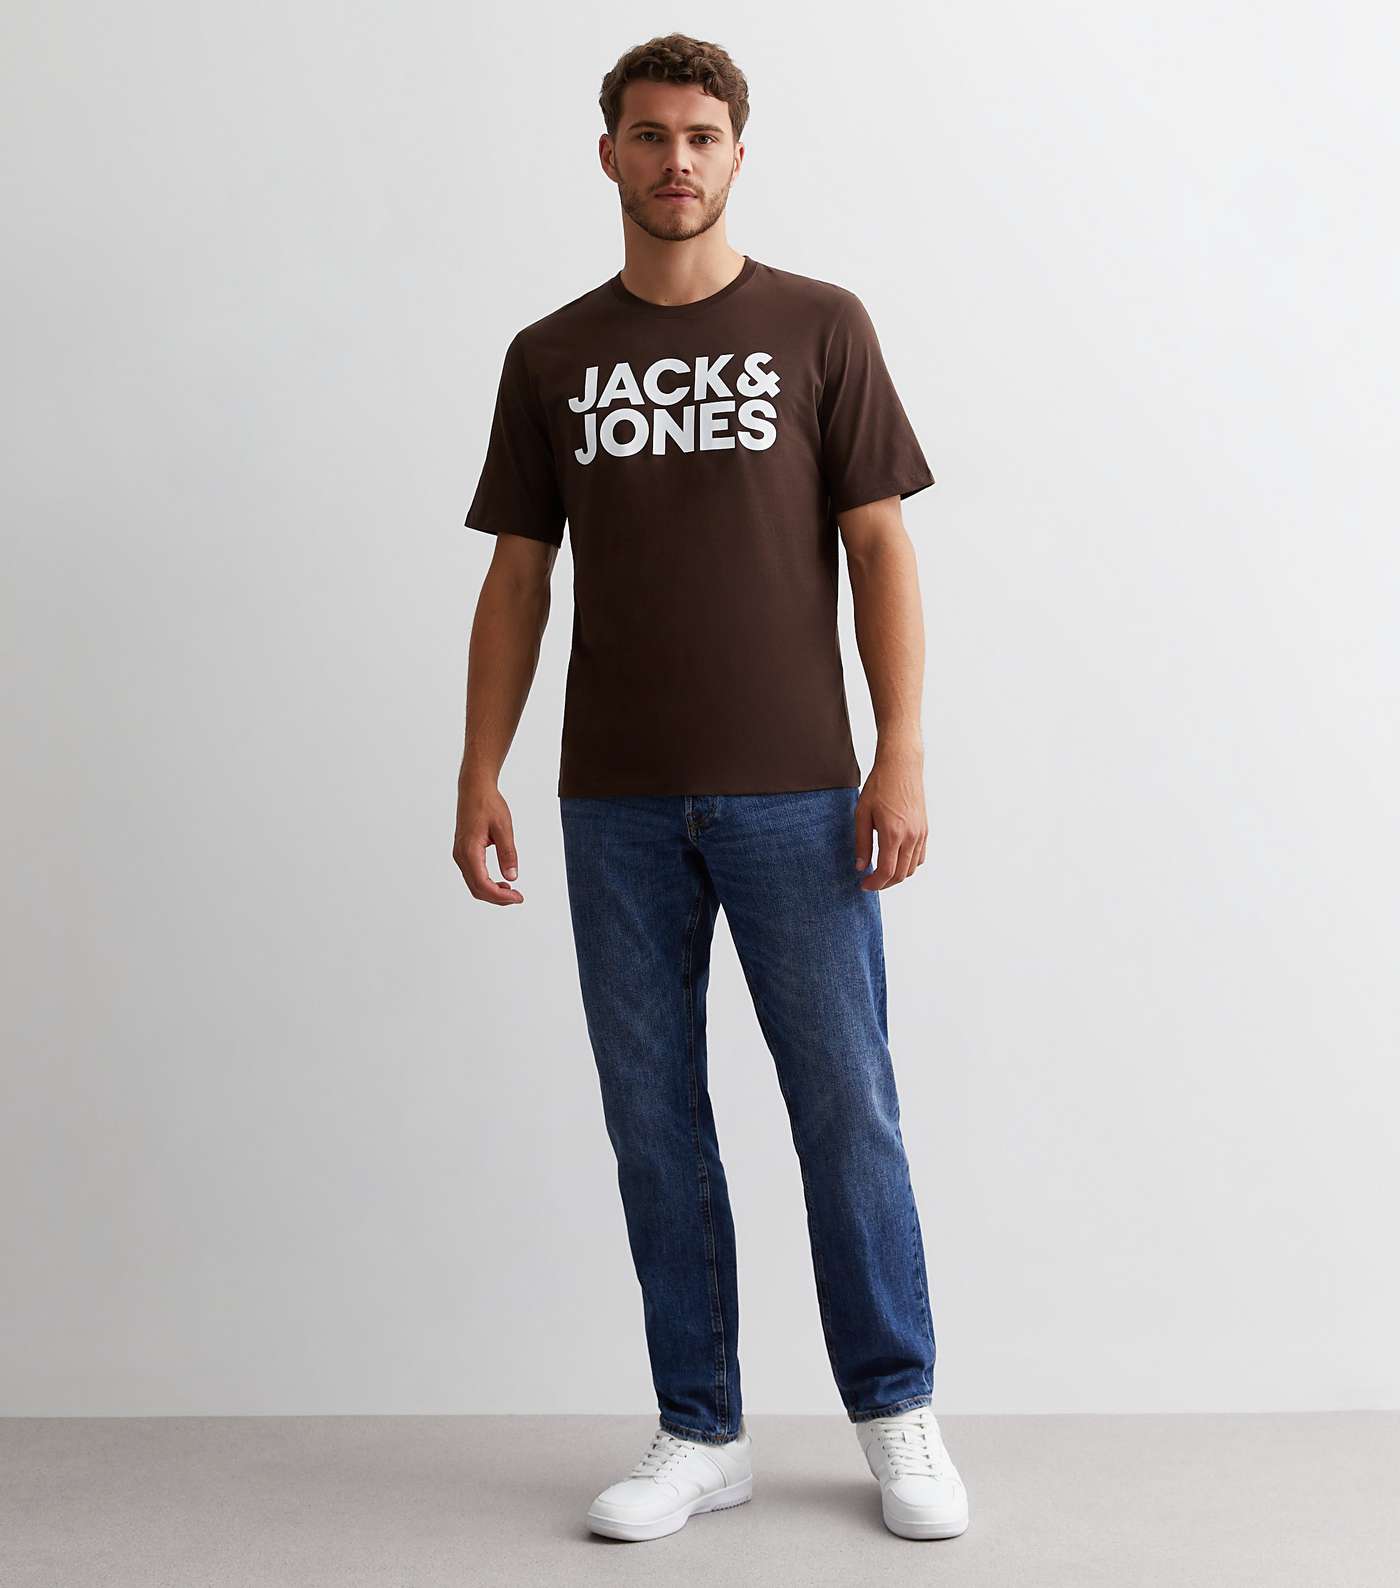 Jack & Jones Dark Brown Cotton Logo T-Shirt Image 3